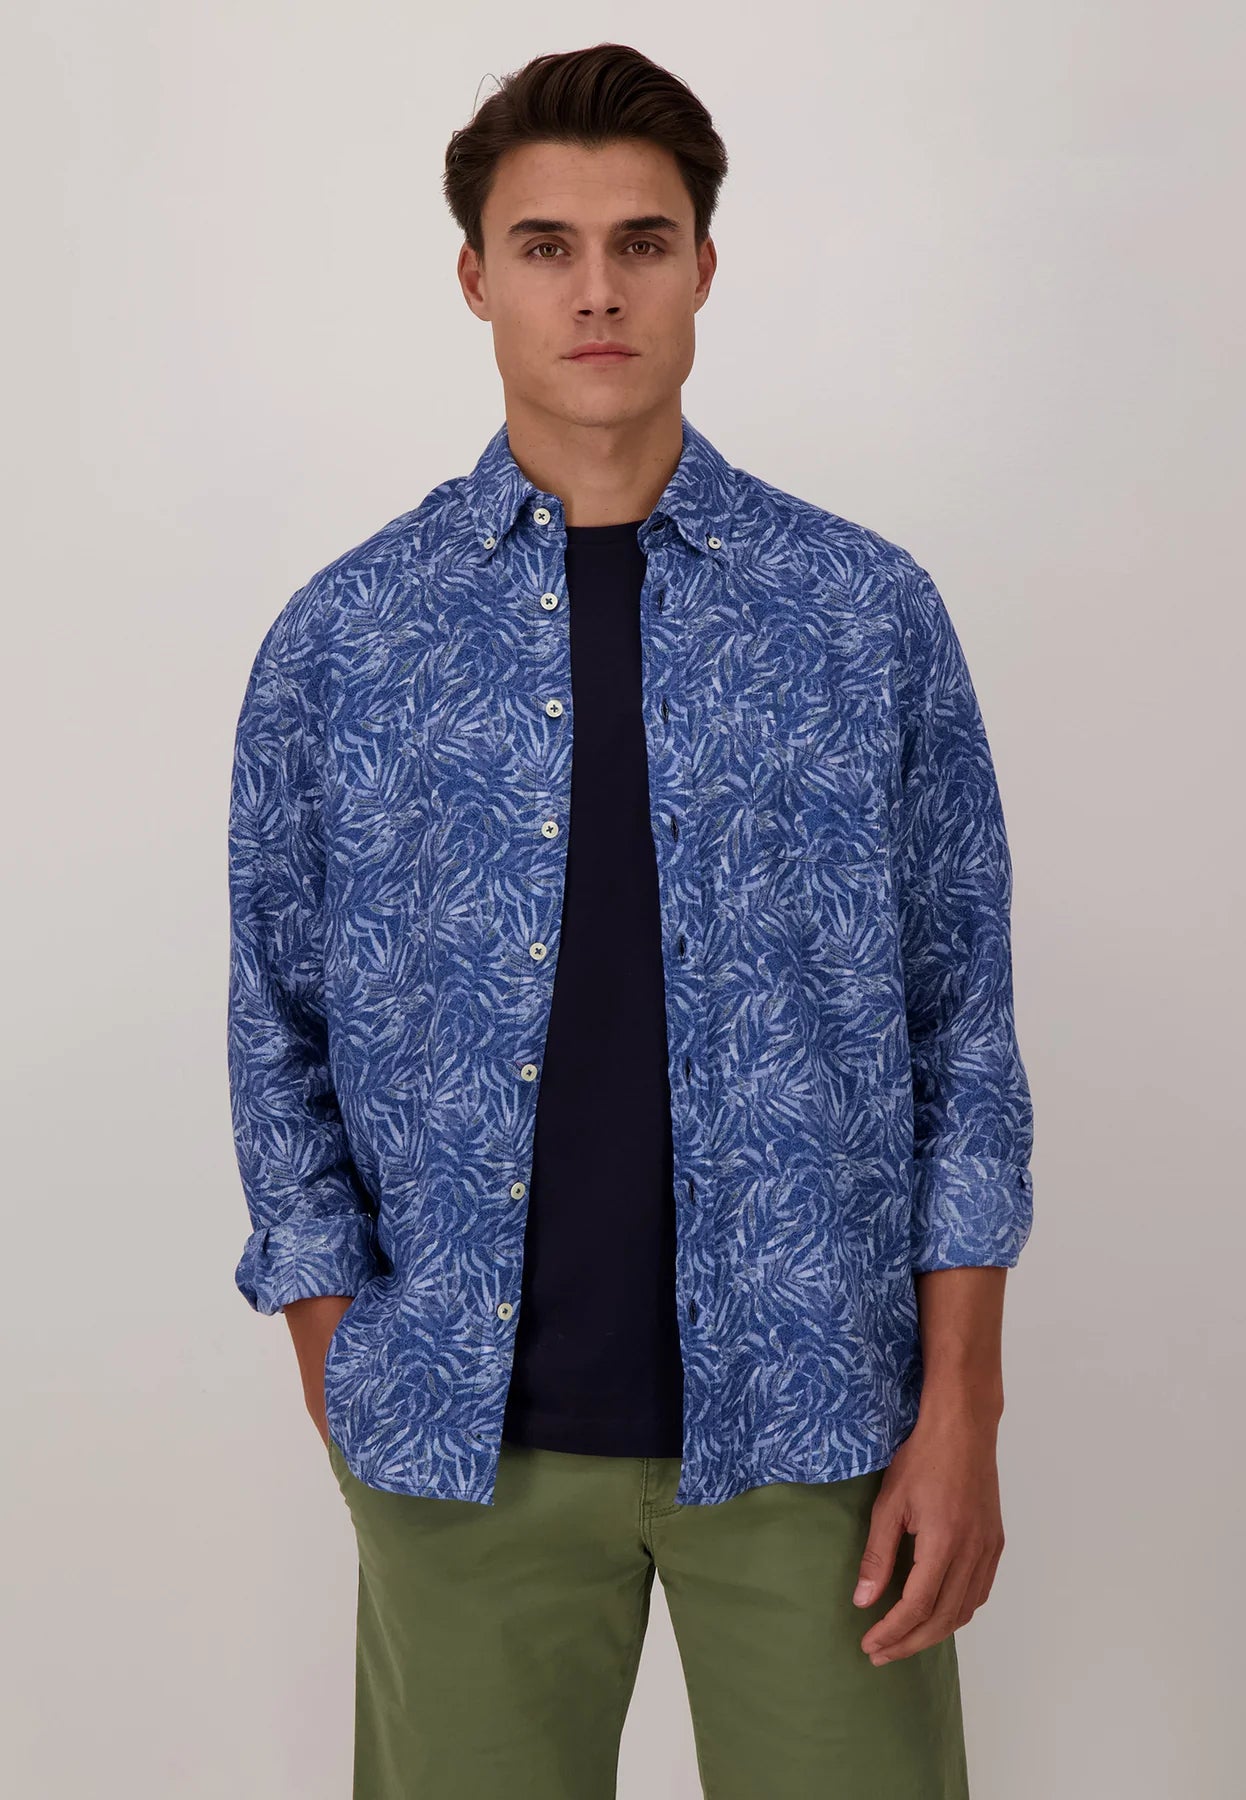 Fynch-Hatton Pure Linen Leaf Print Button Down Collar Long Sleeve Shirt Blue